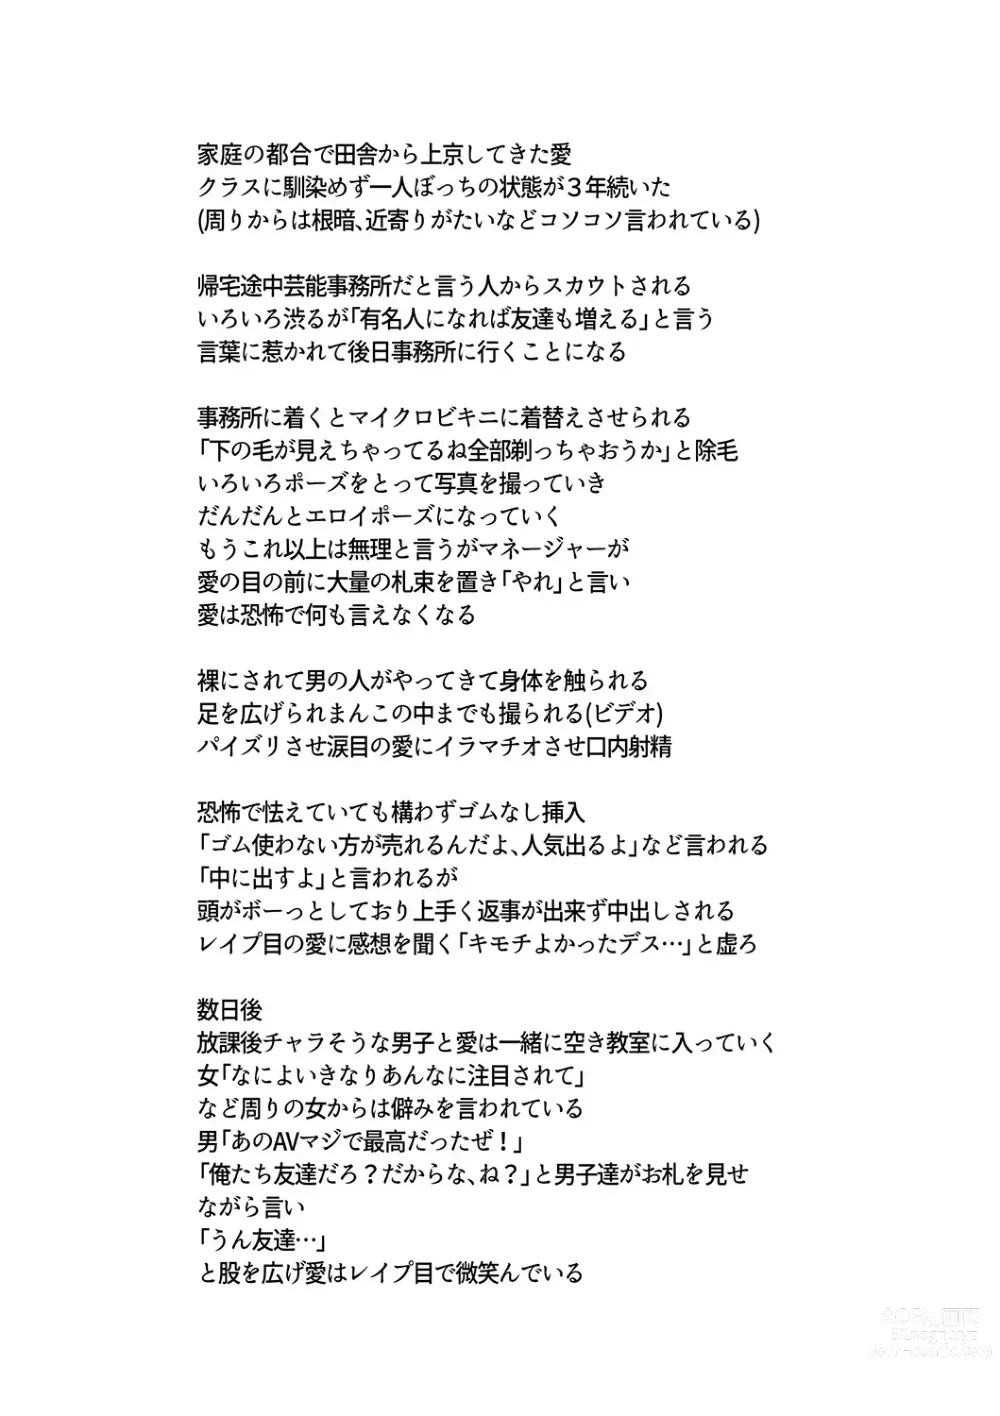 Page 217 of manga Kowashite Asobo + DLsite Gentei Chara Settei & Plot